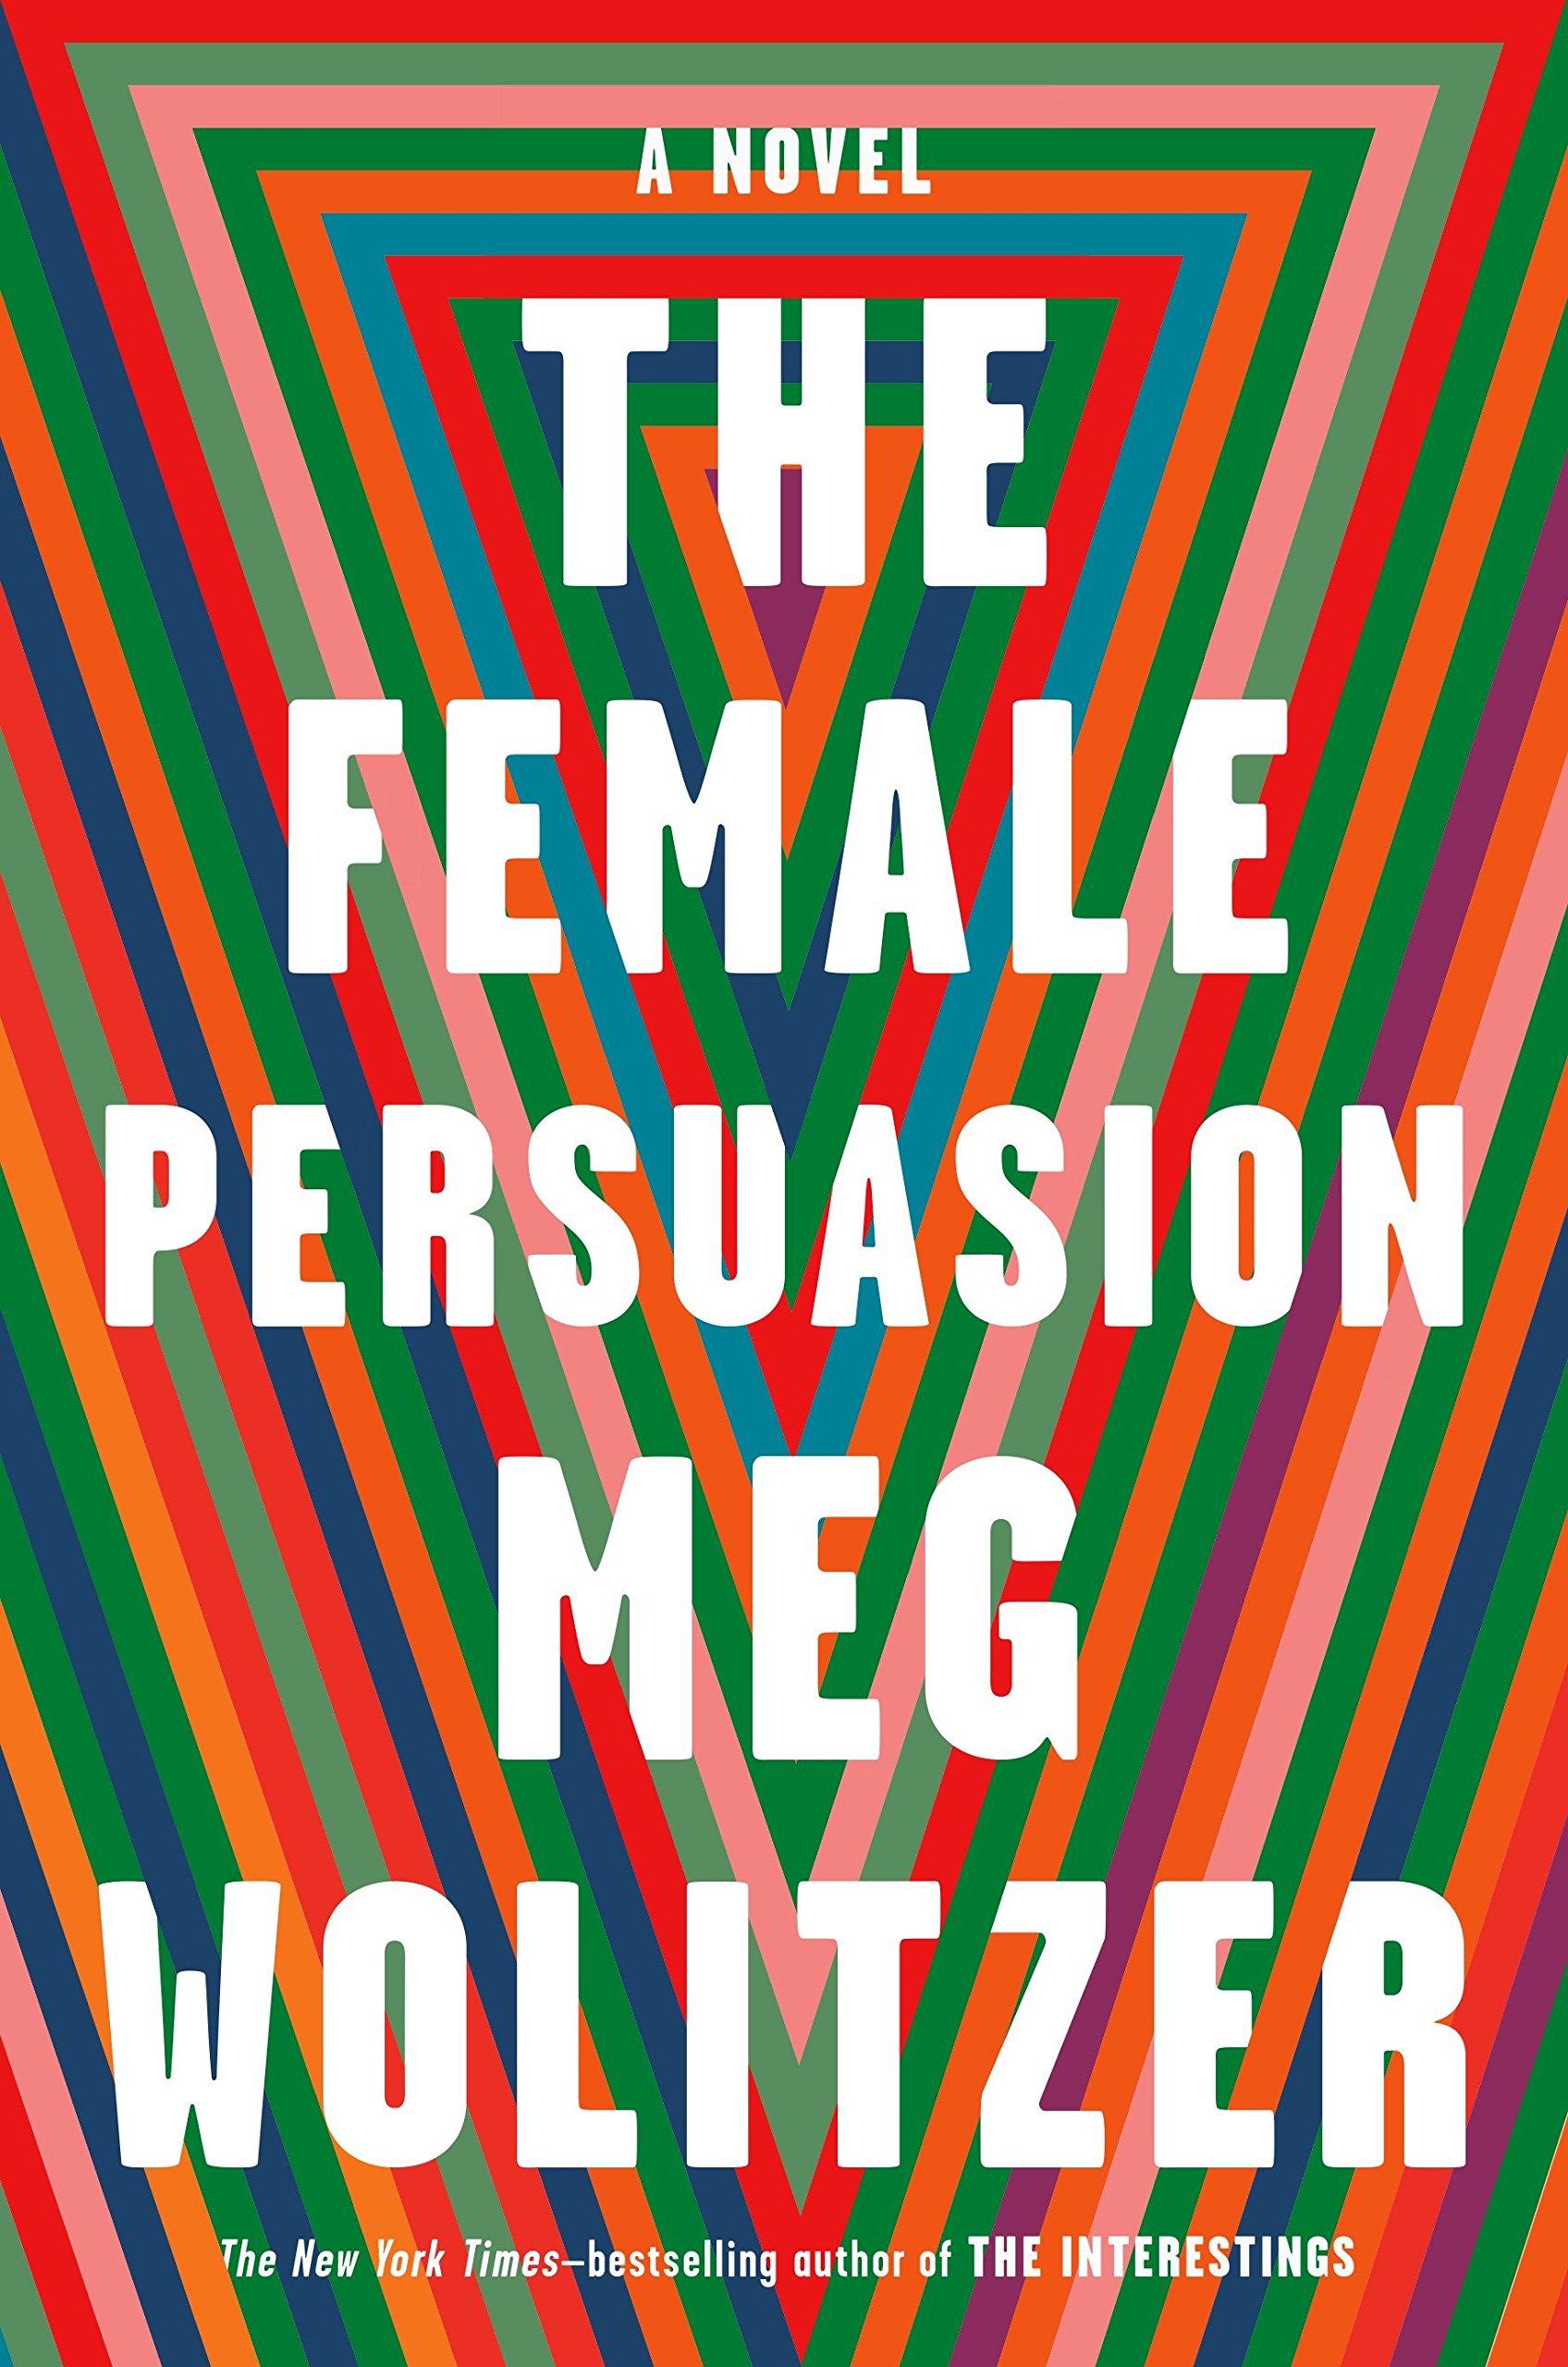 Meg Wolitzer's book cover